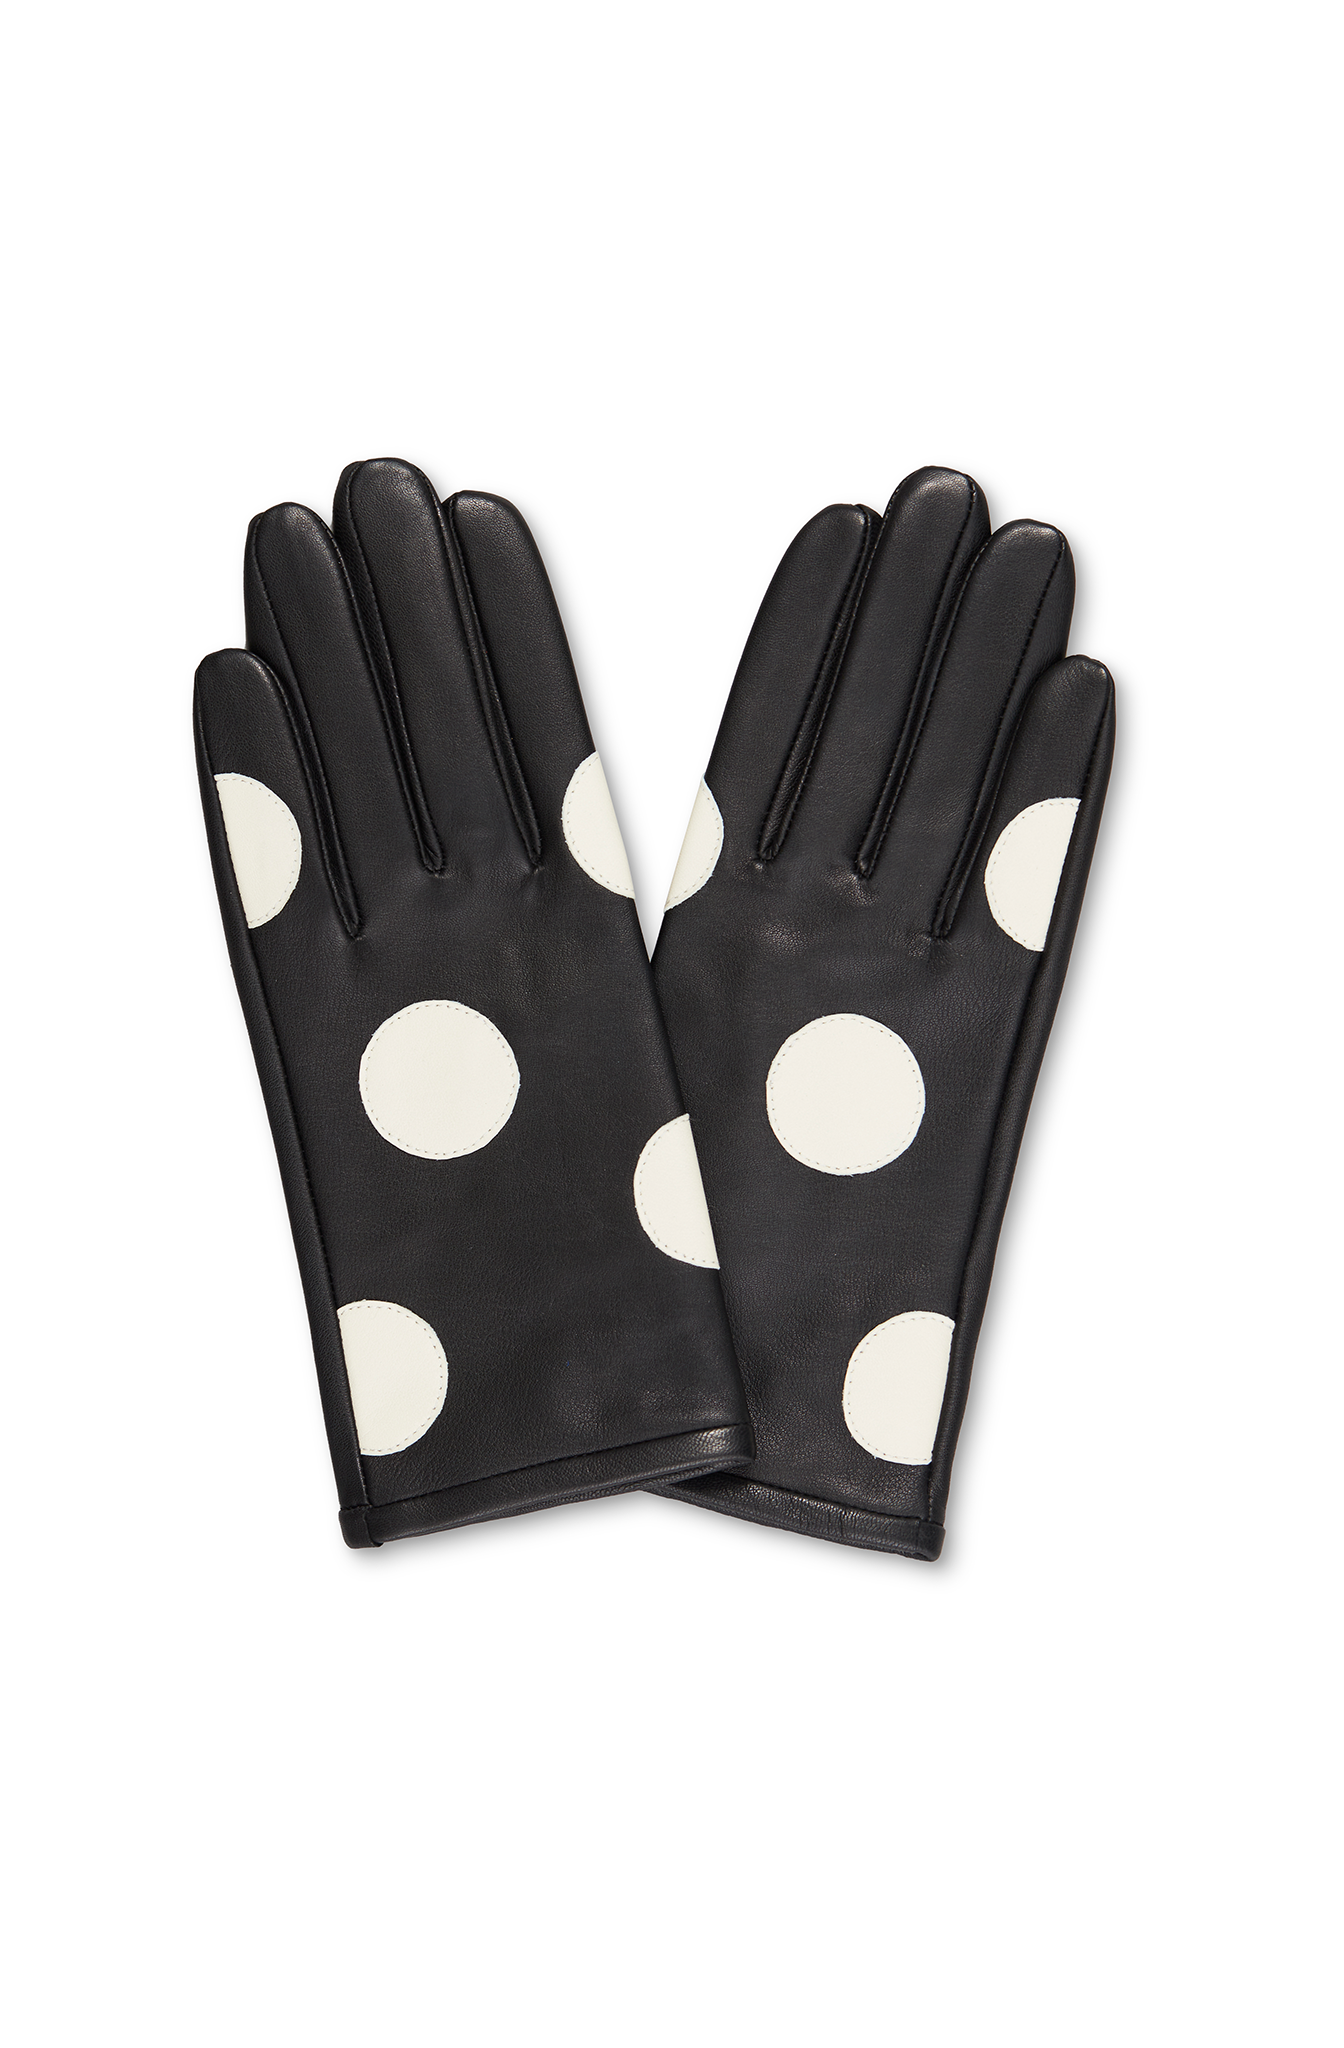 Mabel Sheppard - Black & White Spot Gloves